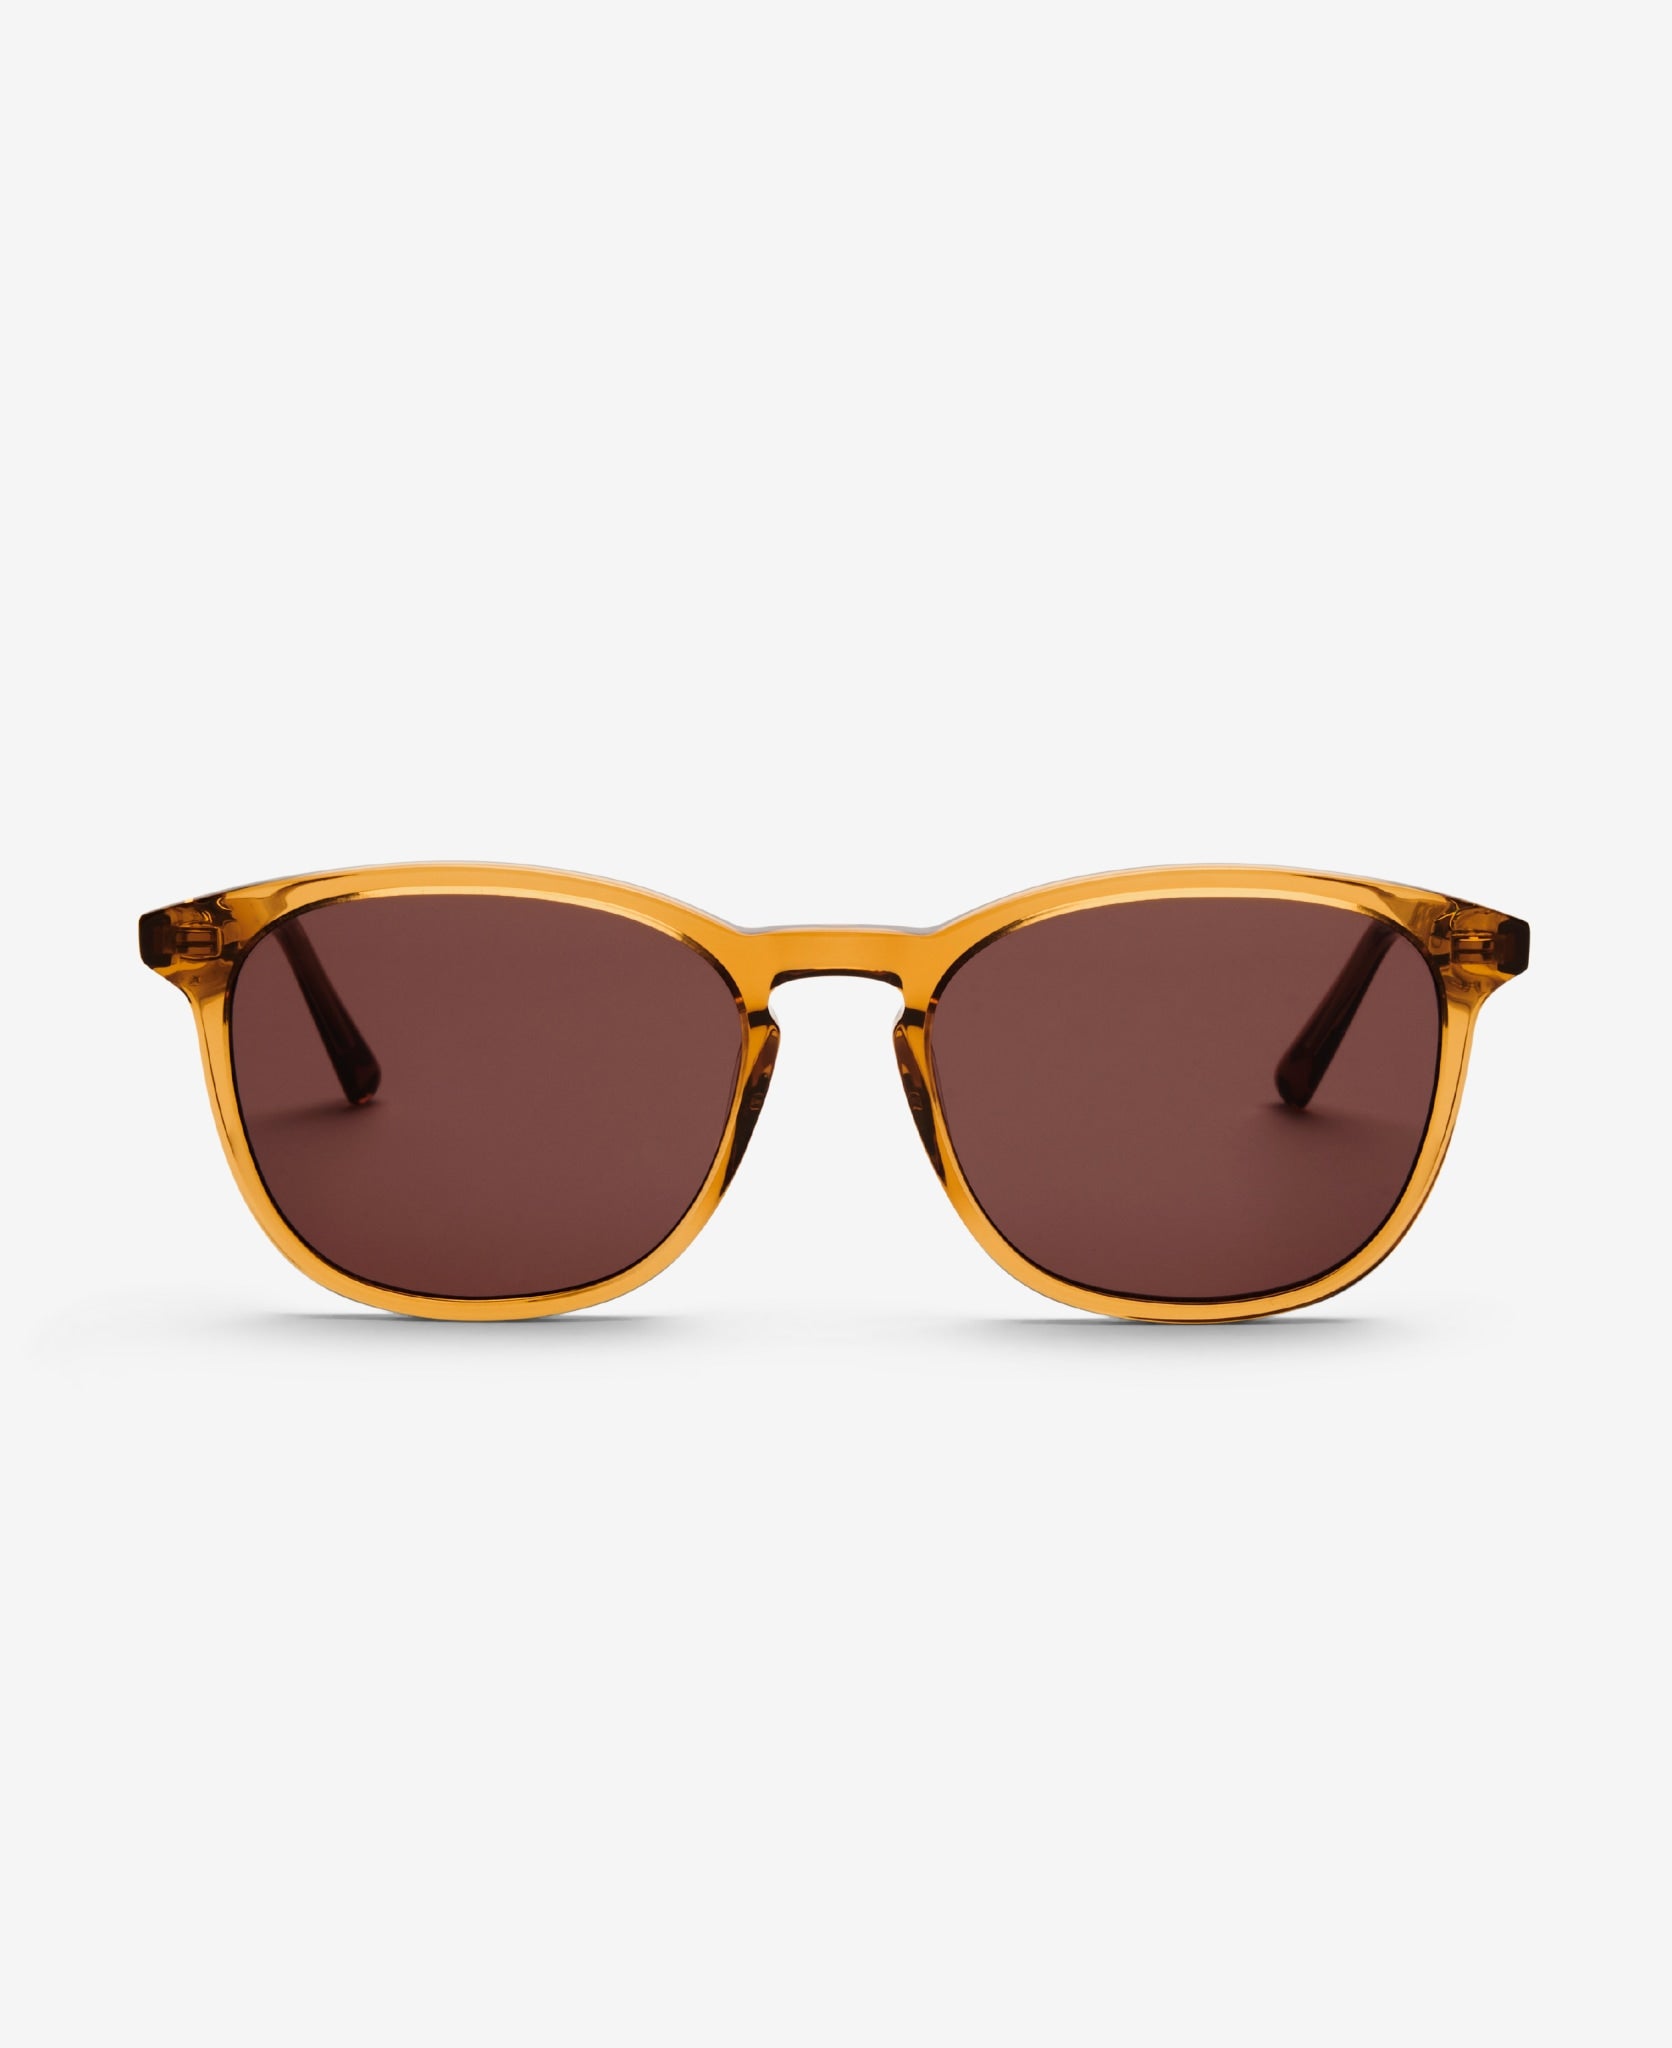 ELECTROPRIME Full Rim Gradient Lens Single Bridge Sunglasses Glasses Coffee  Color : Amazon.in: Clothing & Accessories